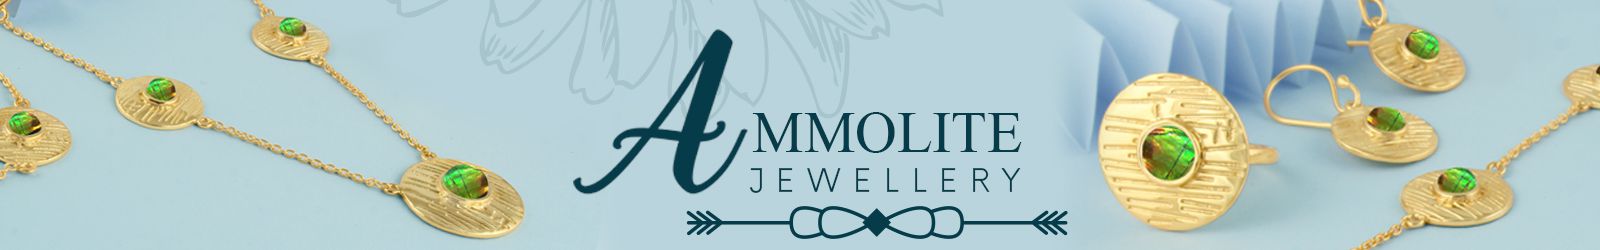 Silver Ammolite Jewelry Wholesale Supplier